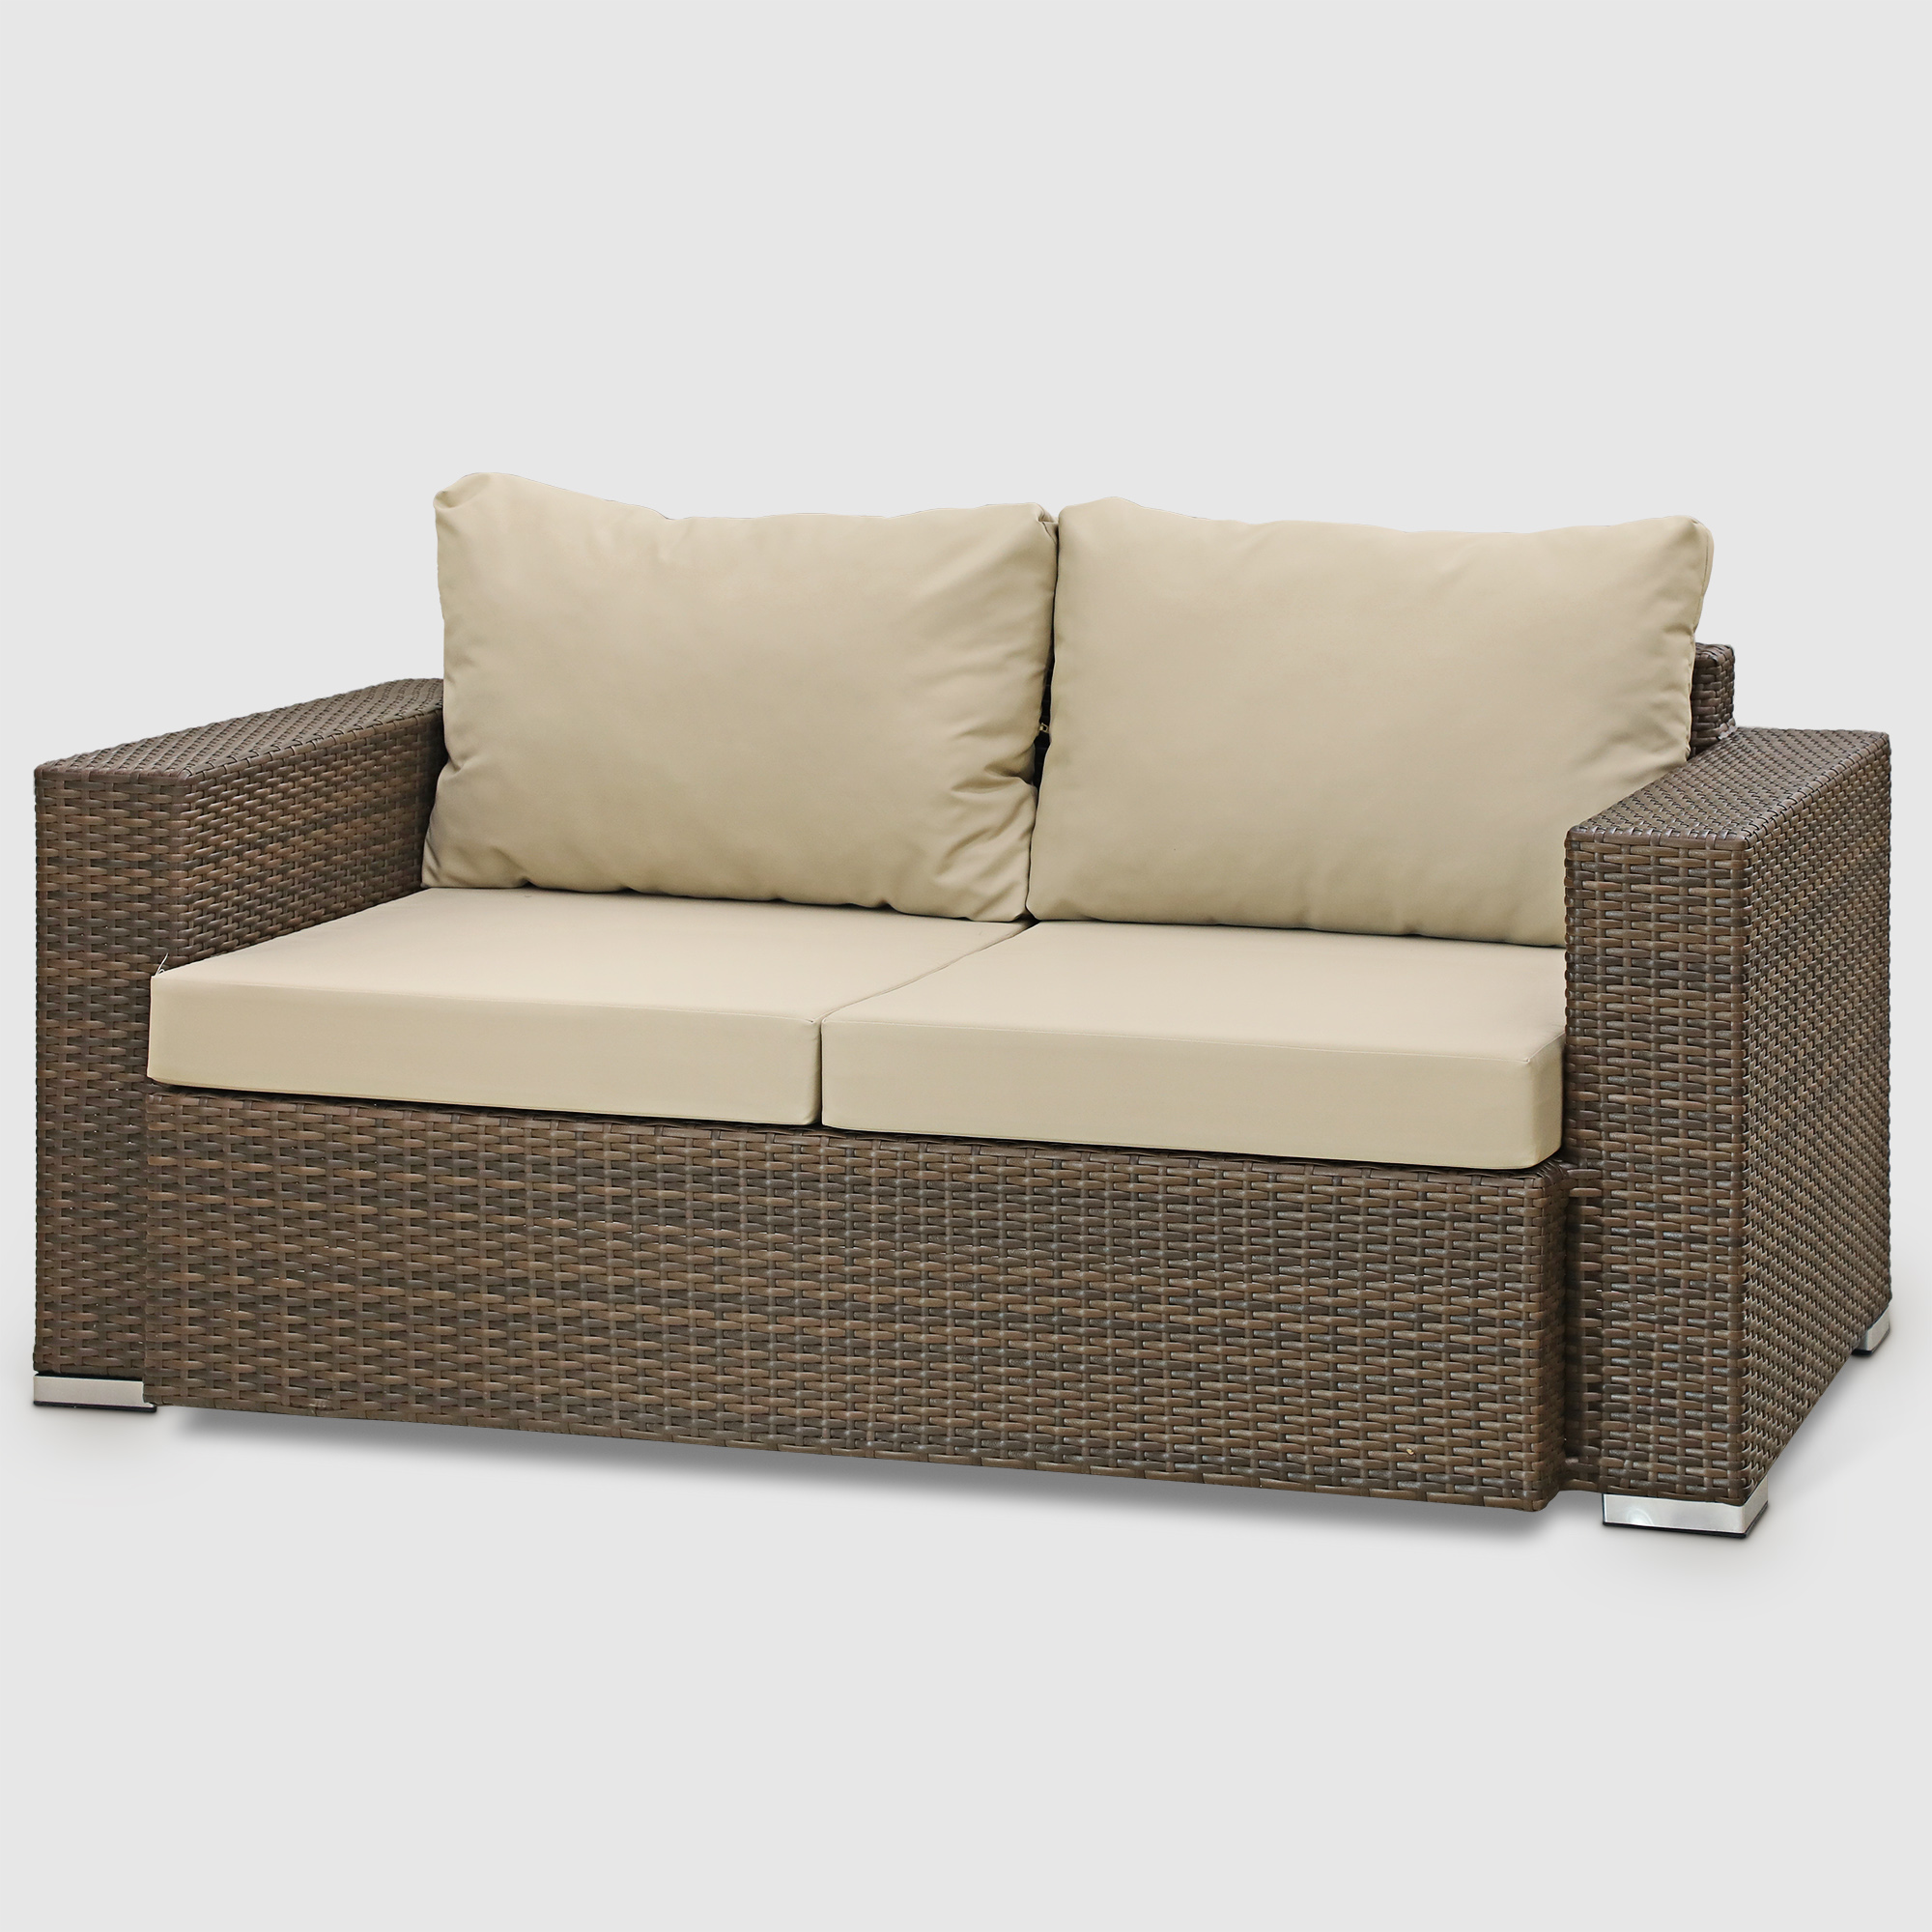 Комплект мебели Ns Rattan Cleo коричневый с бежевым 7 предметов, цвет бежевый, размер 224х88х70 - фото 8